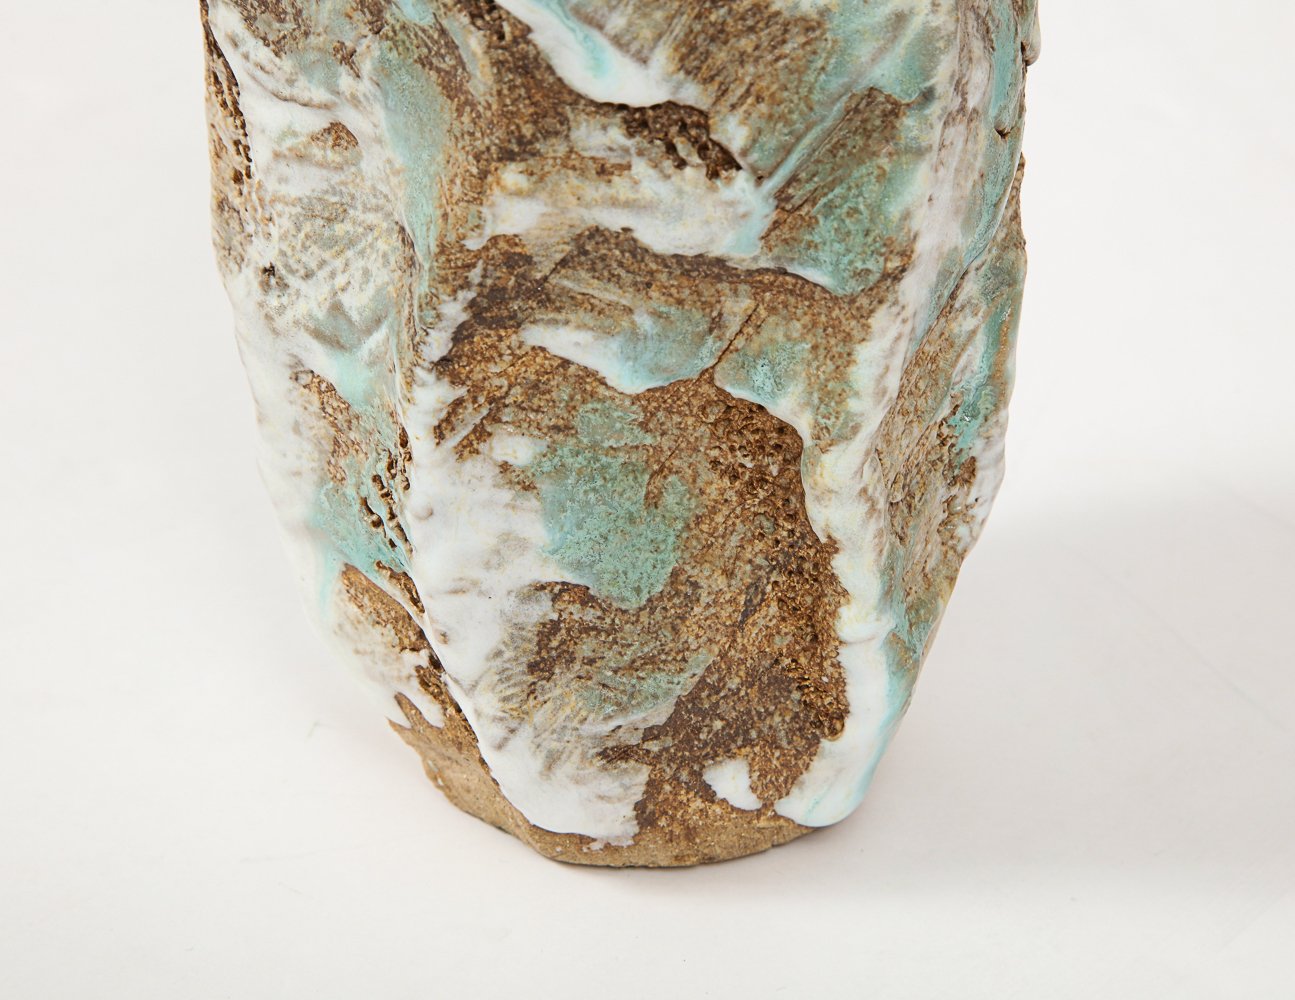 Vase with Blue Interior #3 by Dena Zemsky